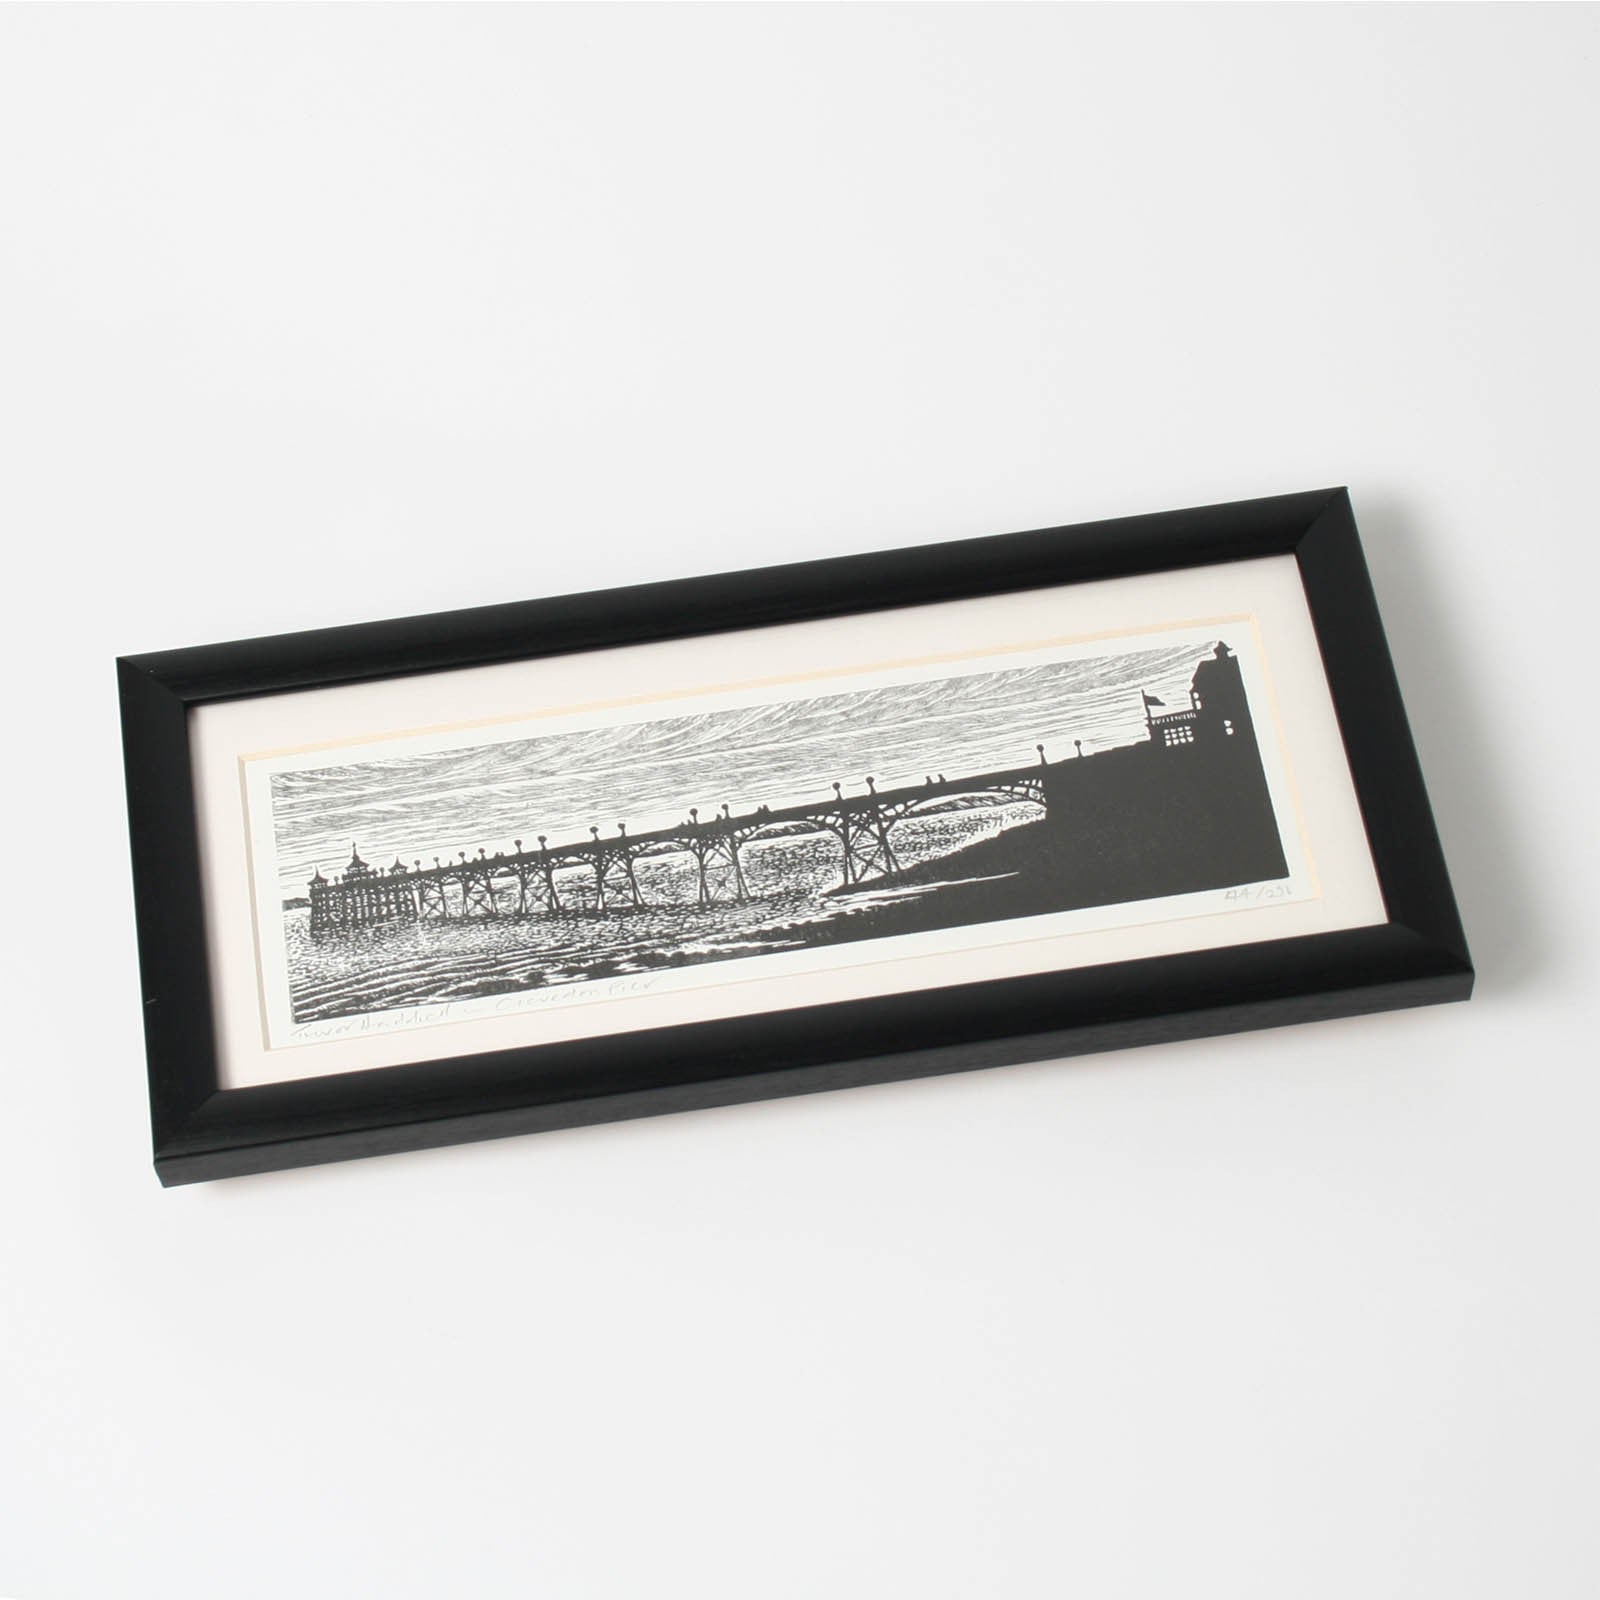 Clevedon Pier Small Framed Print by Trevor Haddrell